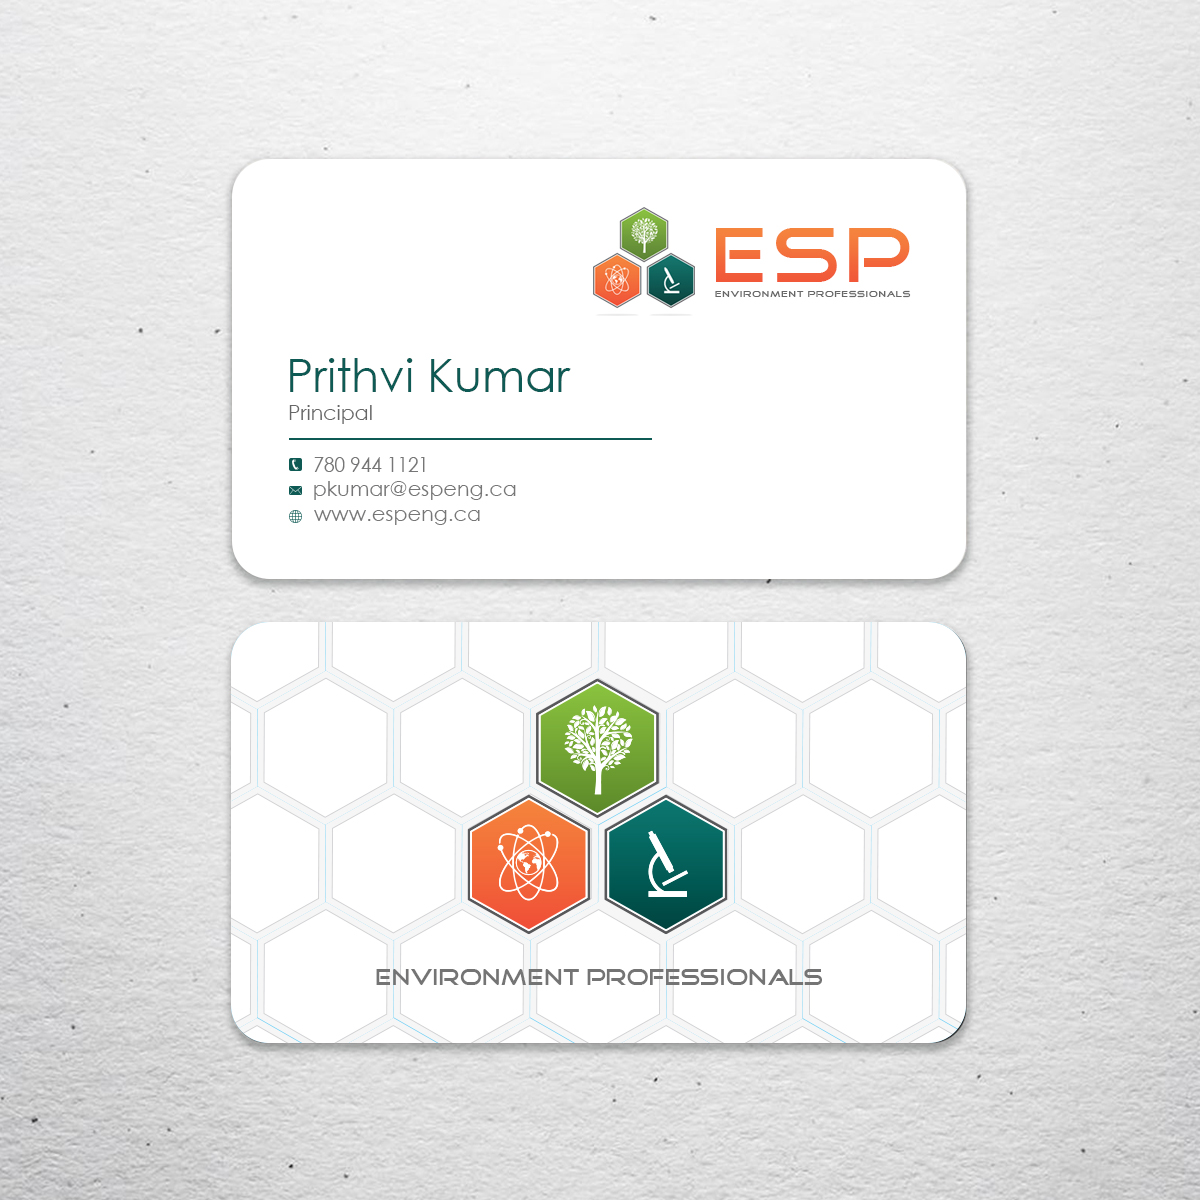 Business Card & Stationery Design entry 1686601 submitted by Sonia99 to the Business Card & Stationery Design for ESP run by pkumar@espeng.ca